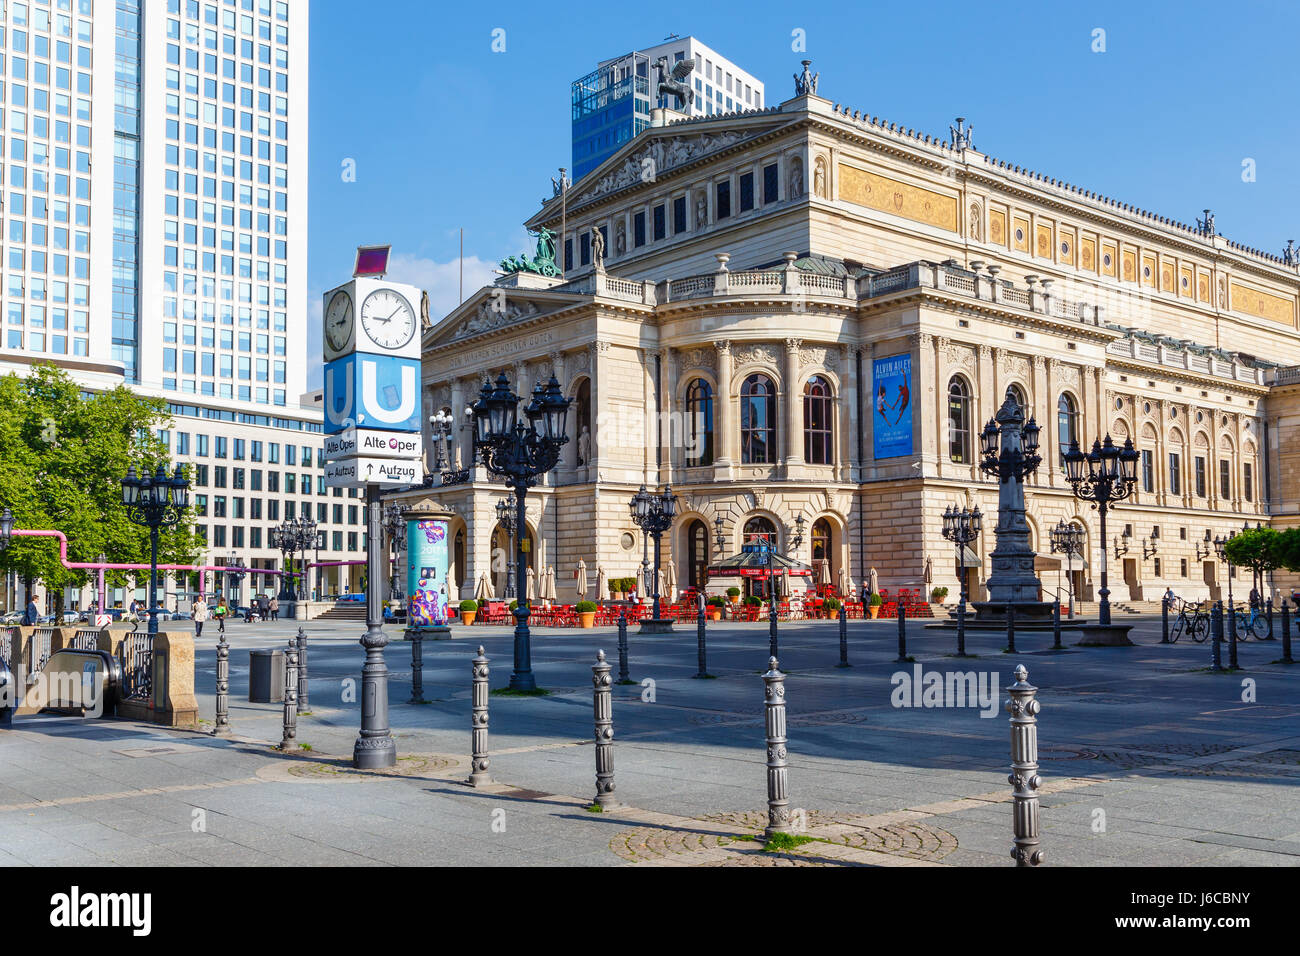 Alte Oper ("Old Opera") in Frankfurt, Germany. May 2017. Stock Photo